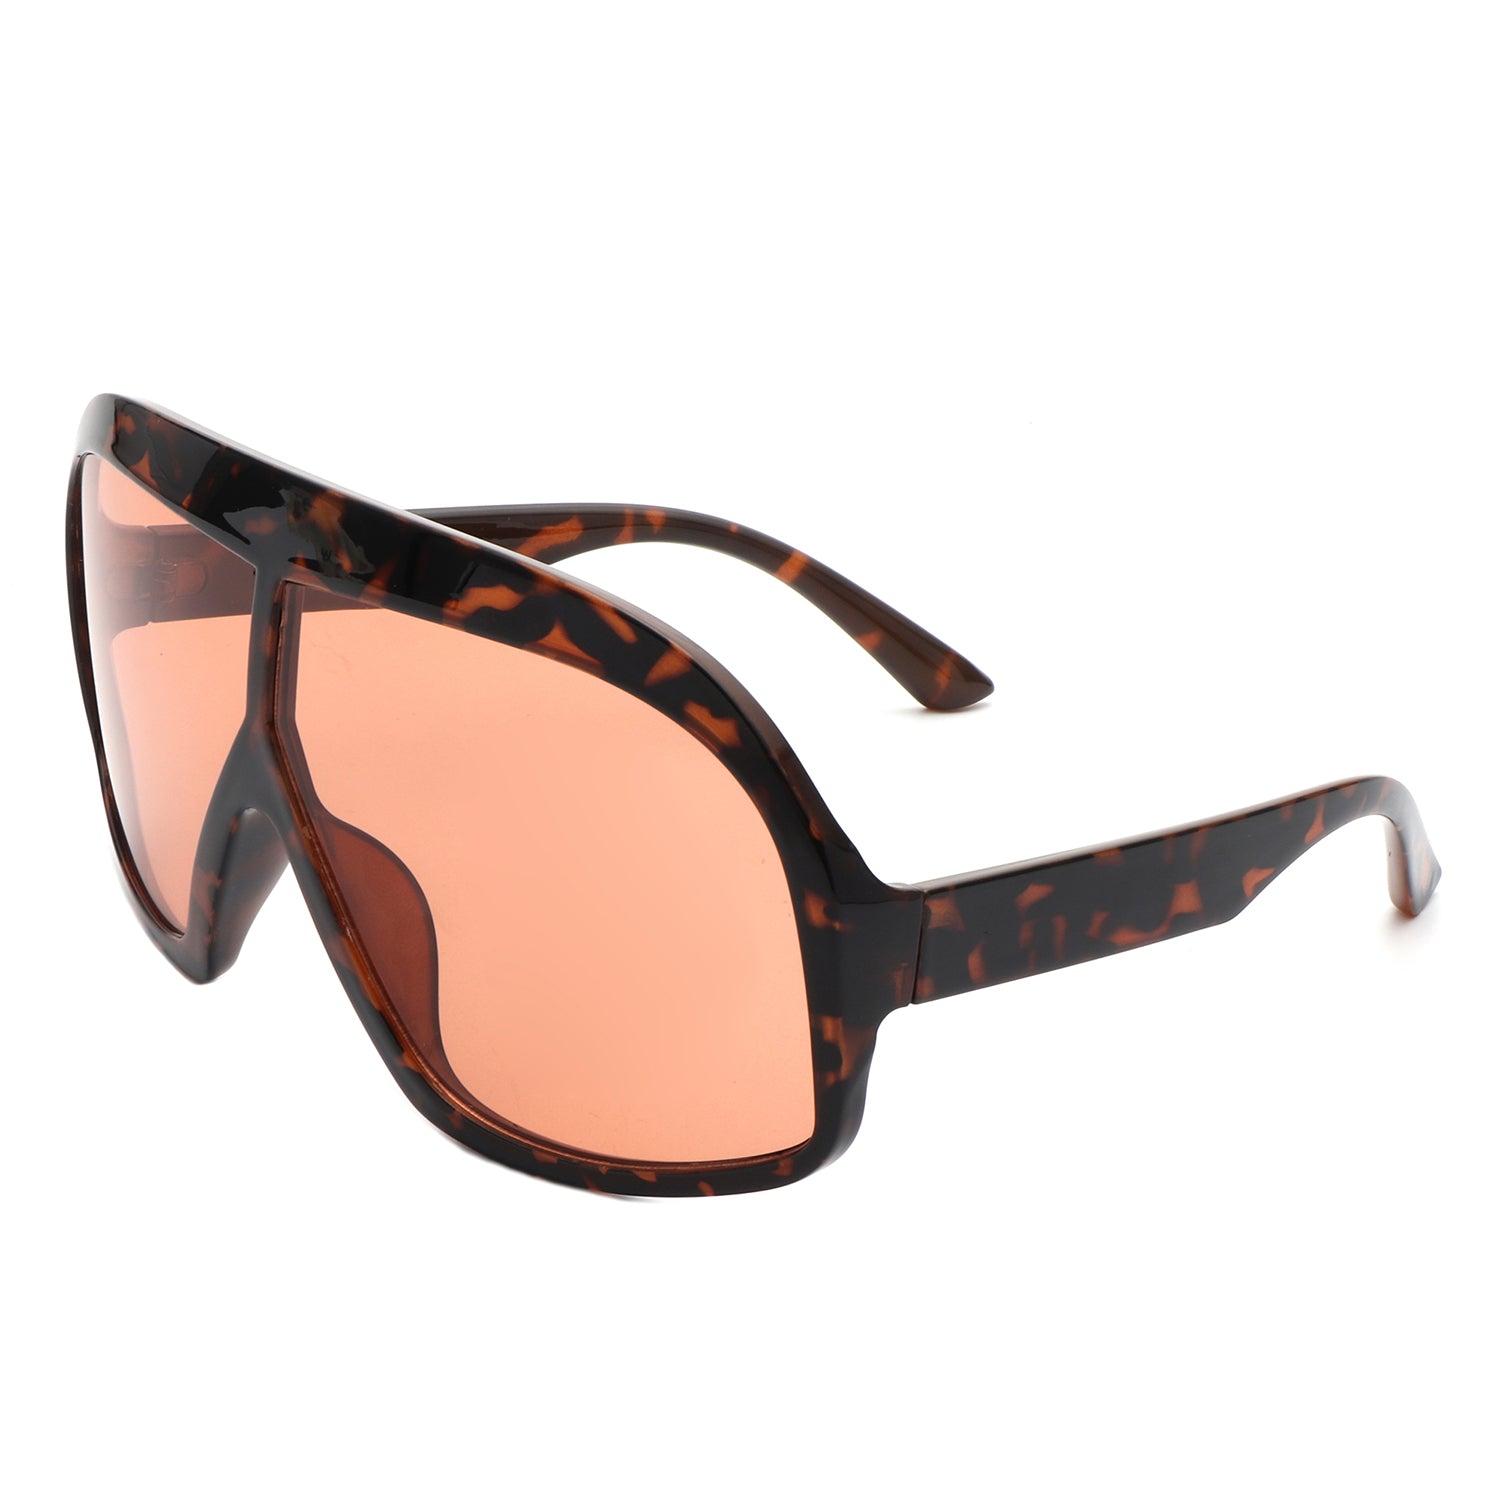 S2132 - Oversize Retro Square Shield Tinted Curved Fashion Wholesale Sunglasses